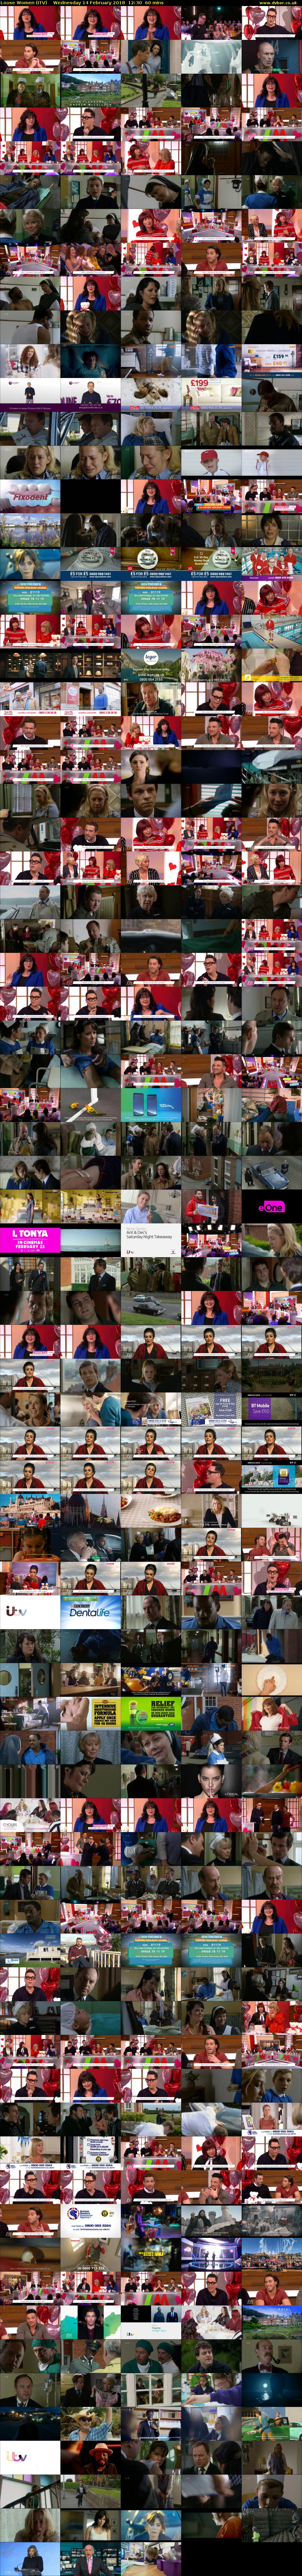 Loose Women (ITV) Wednesday 14 February 2018 12:30 - 13:30